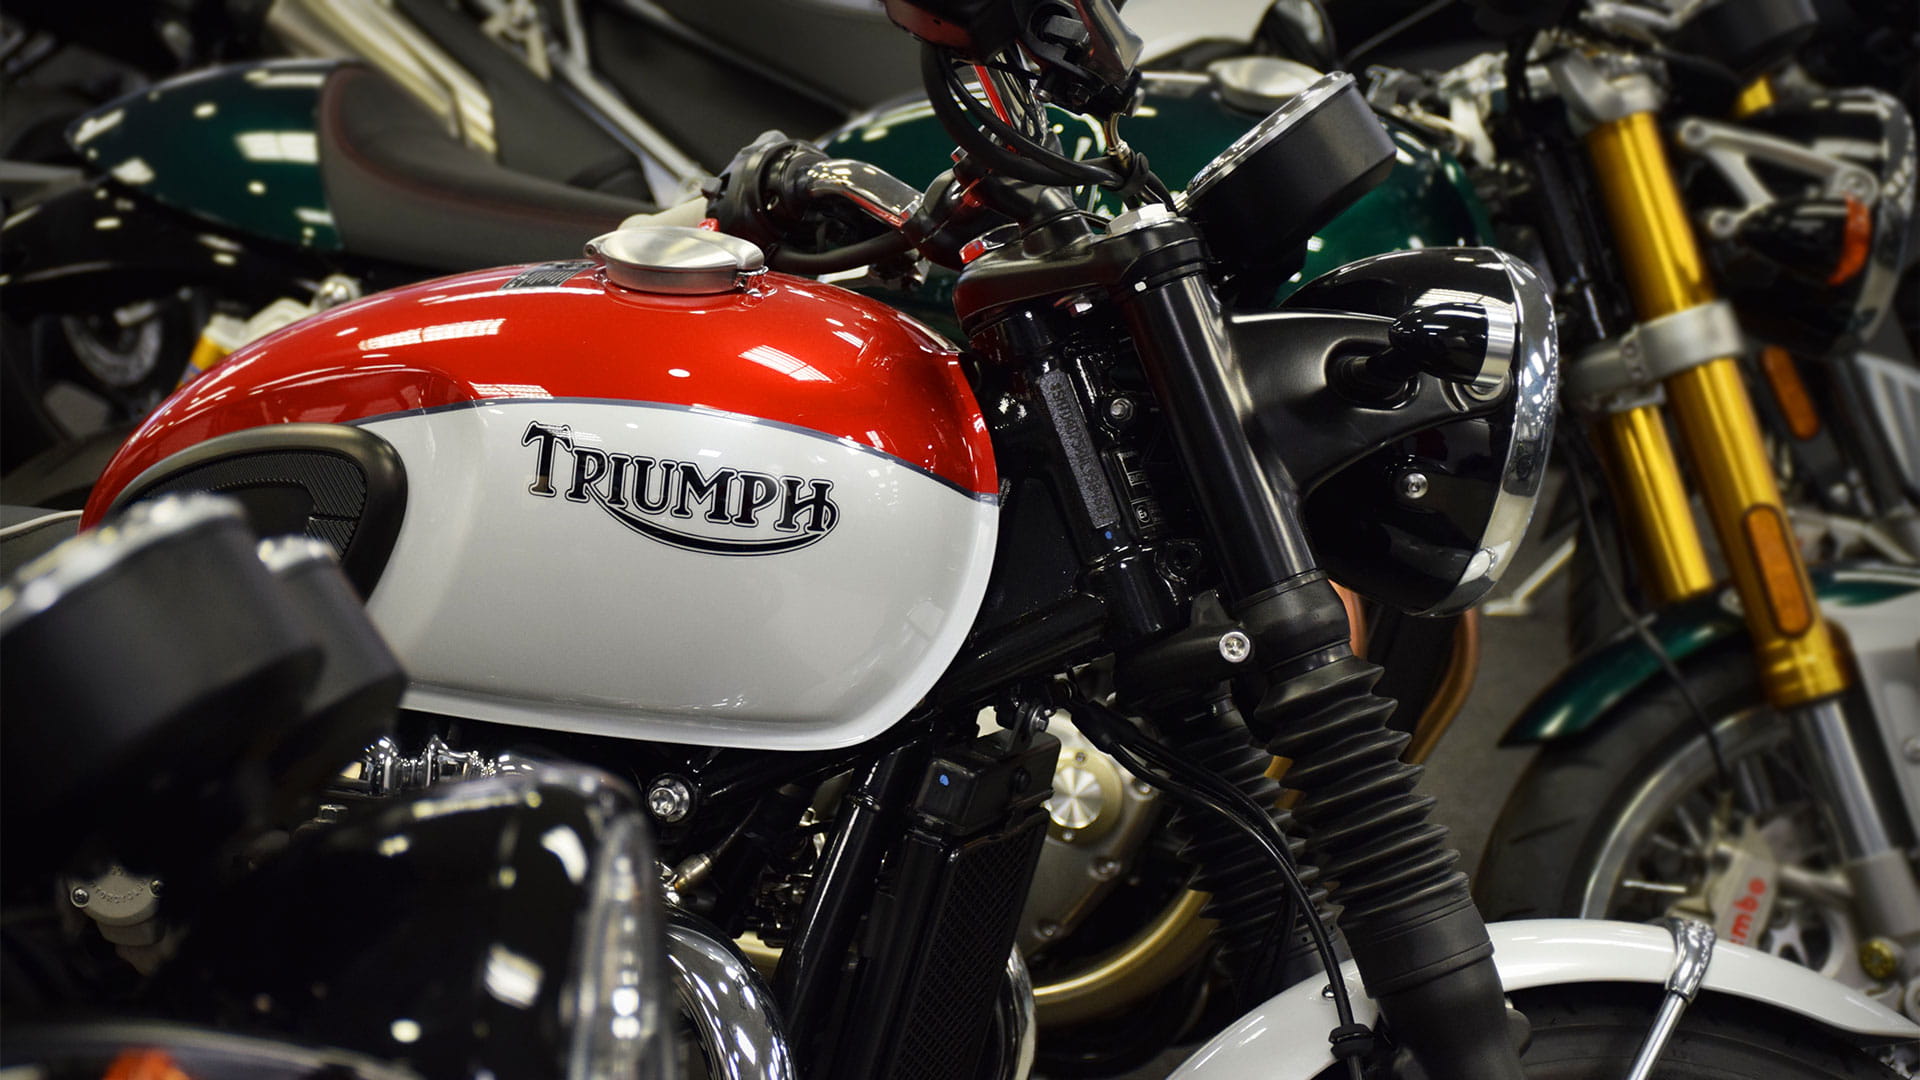 Triumph motorcycles dealership in Maidstone - Laguna Motorcycles